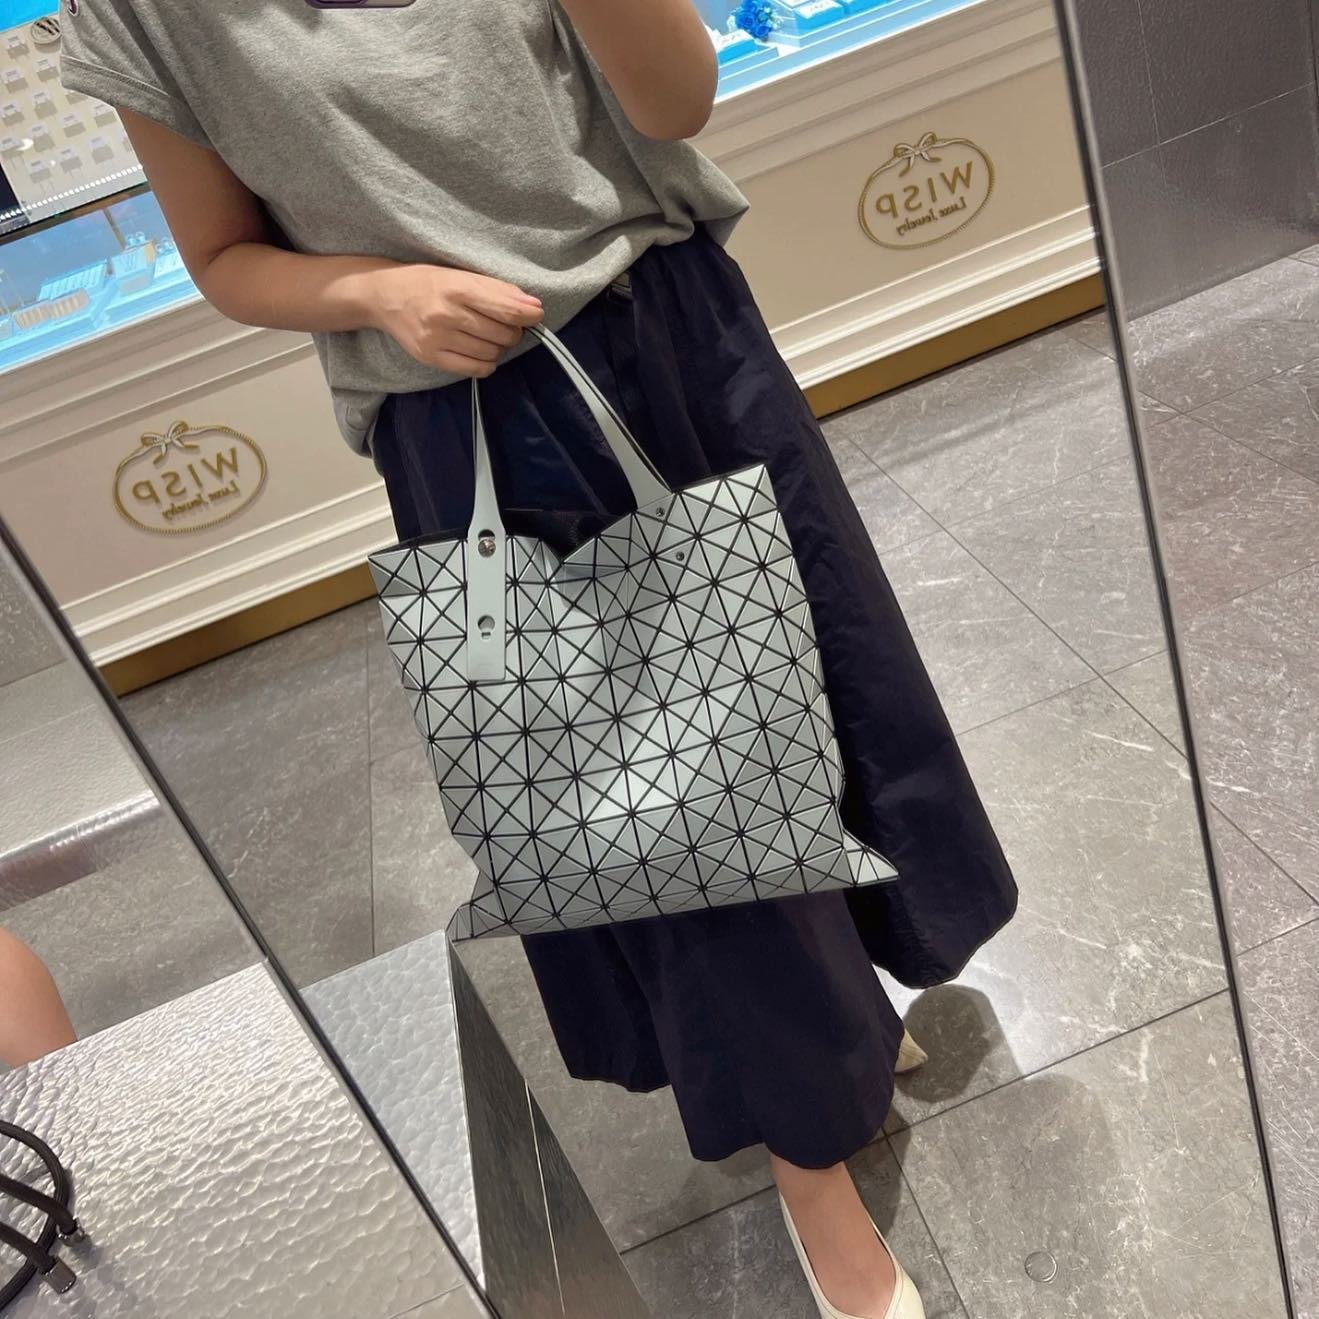 Bao Bao Issey Miyake 'lucent' Shopper Bag in Gray